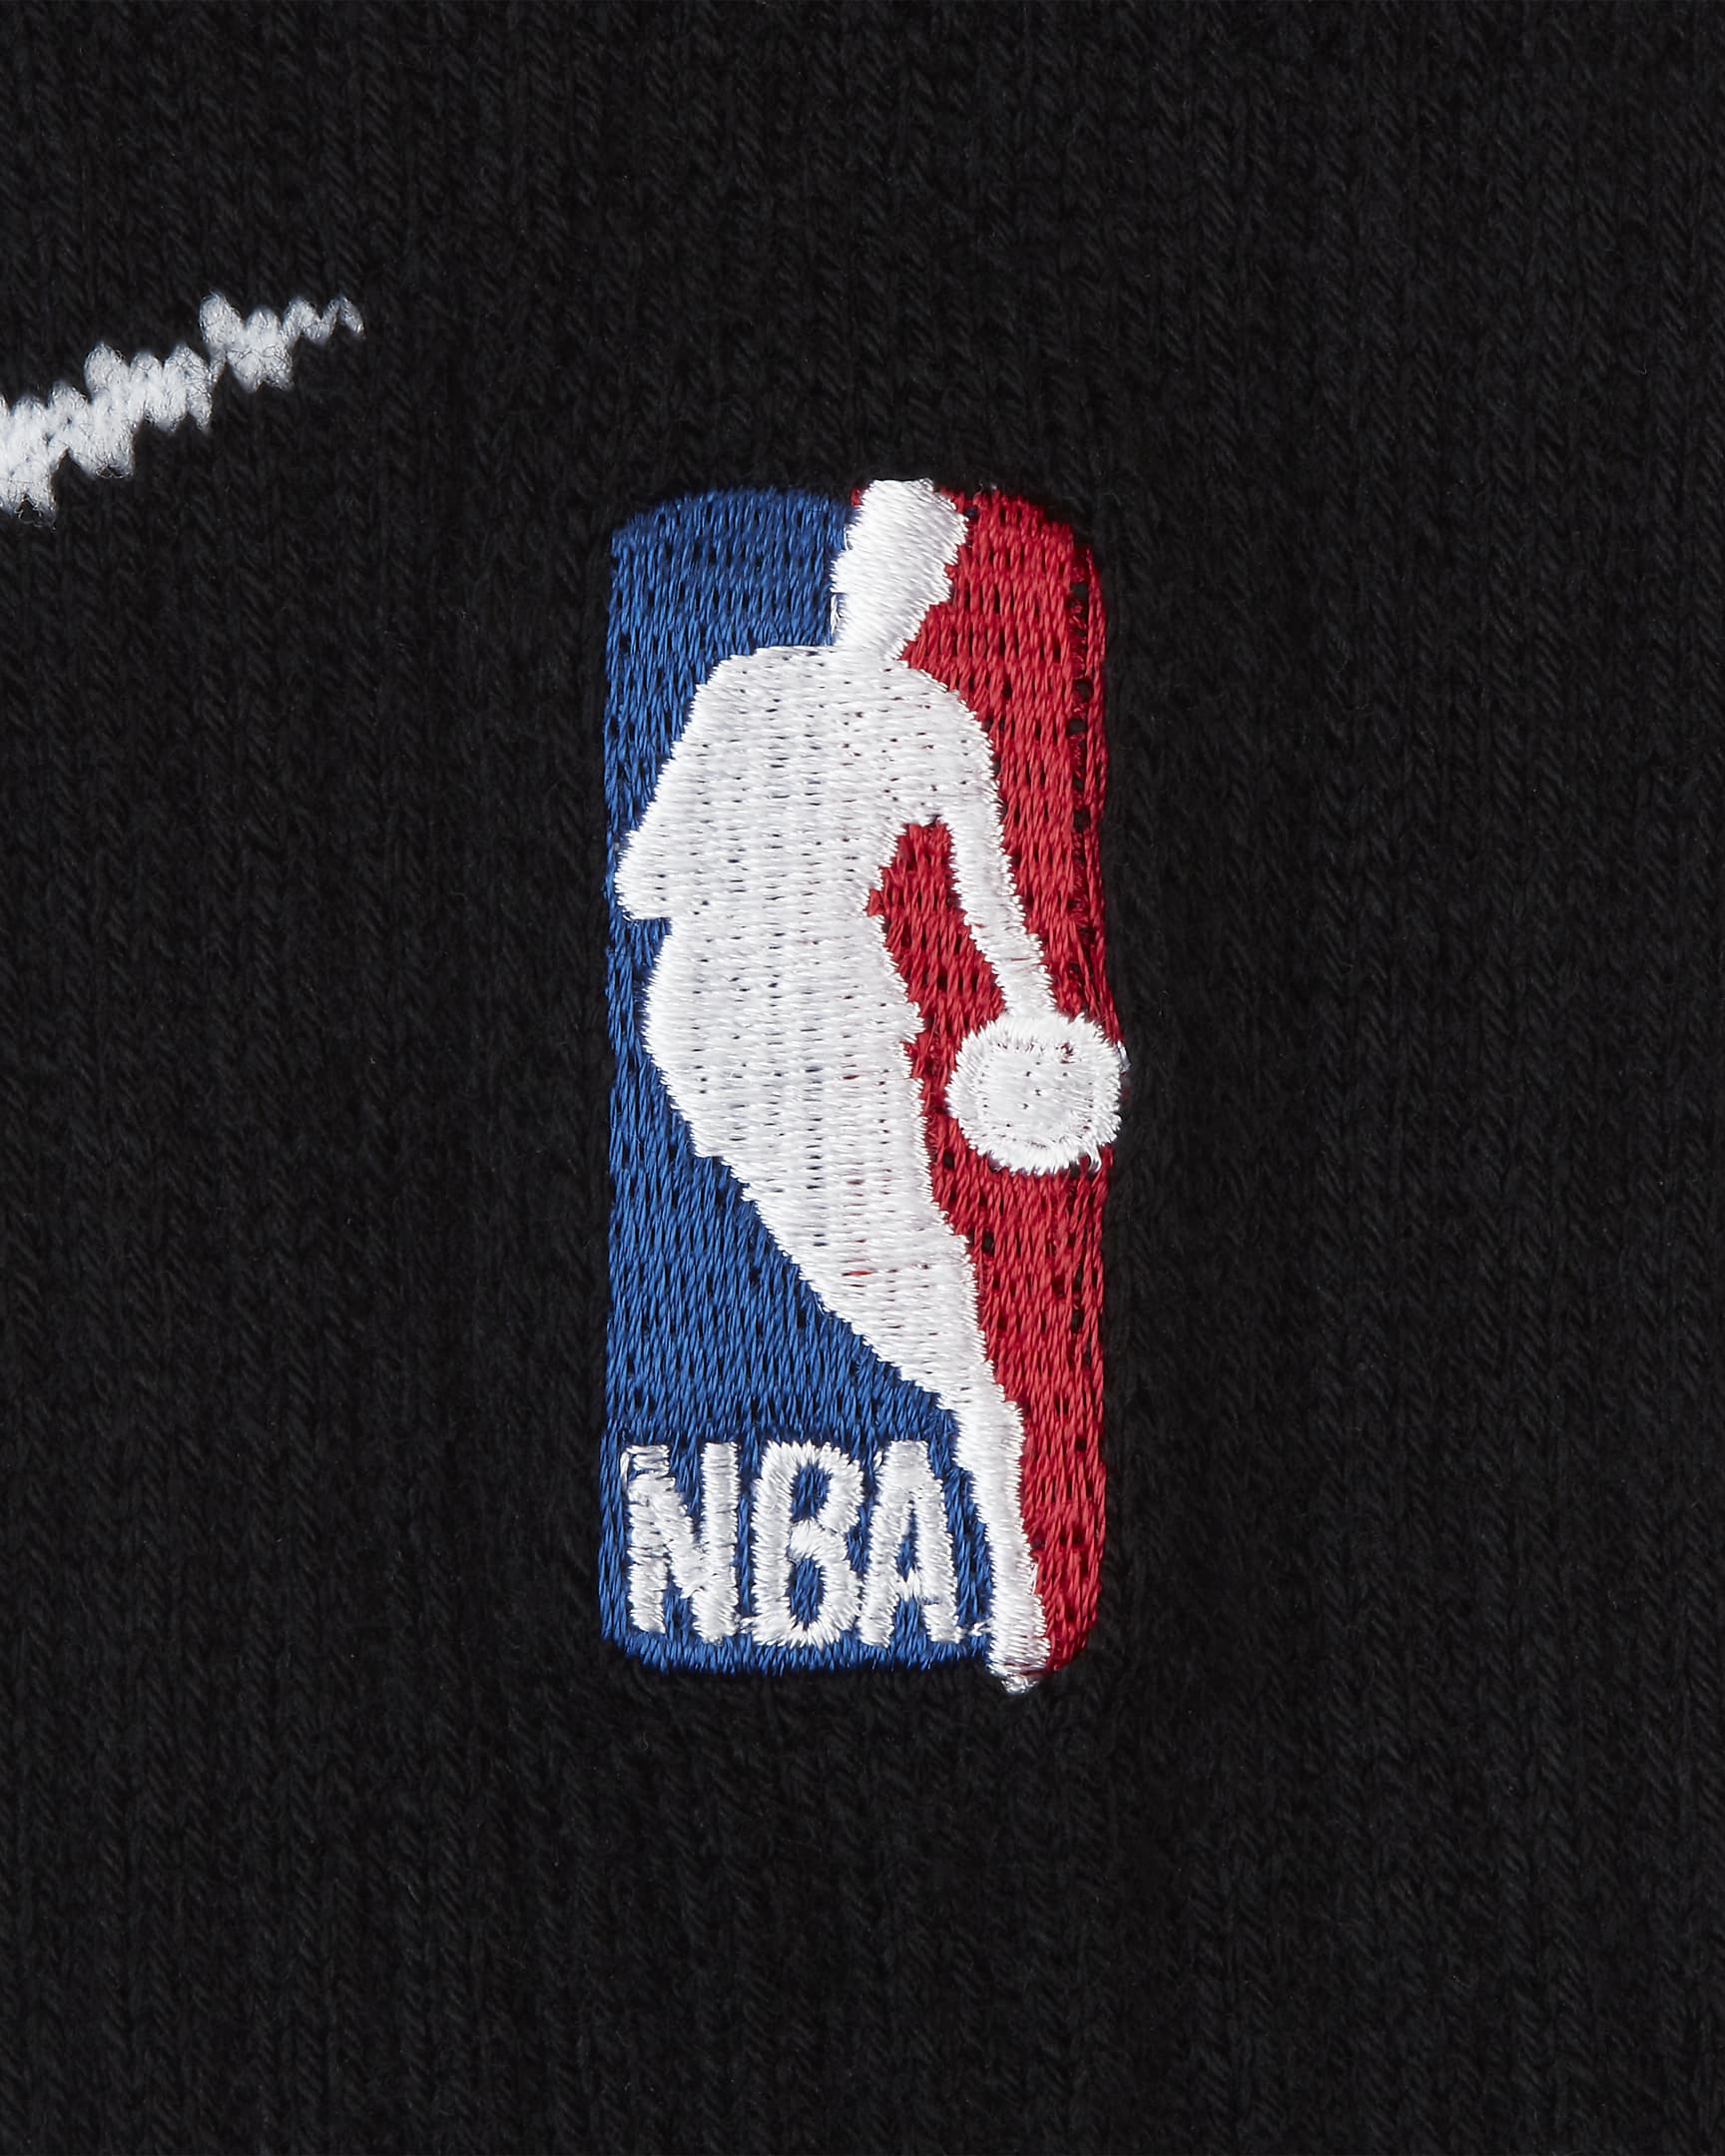 Nike Elite NBA Crew Socks. Nike IN